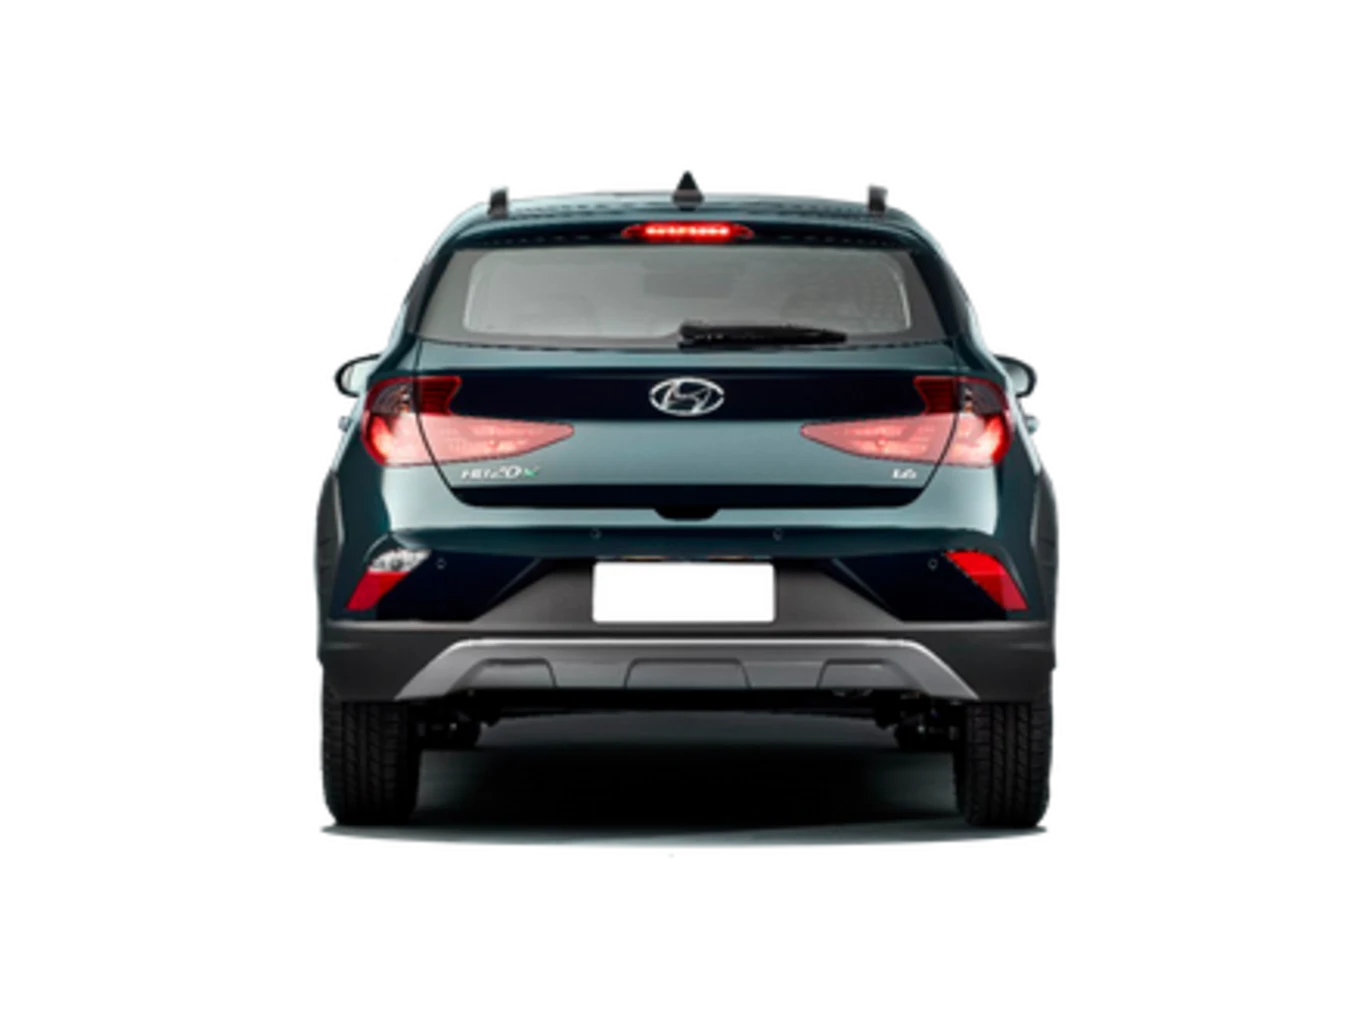 Hyundai HB20X Vision 1.6 (Aut) (Flex)